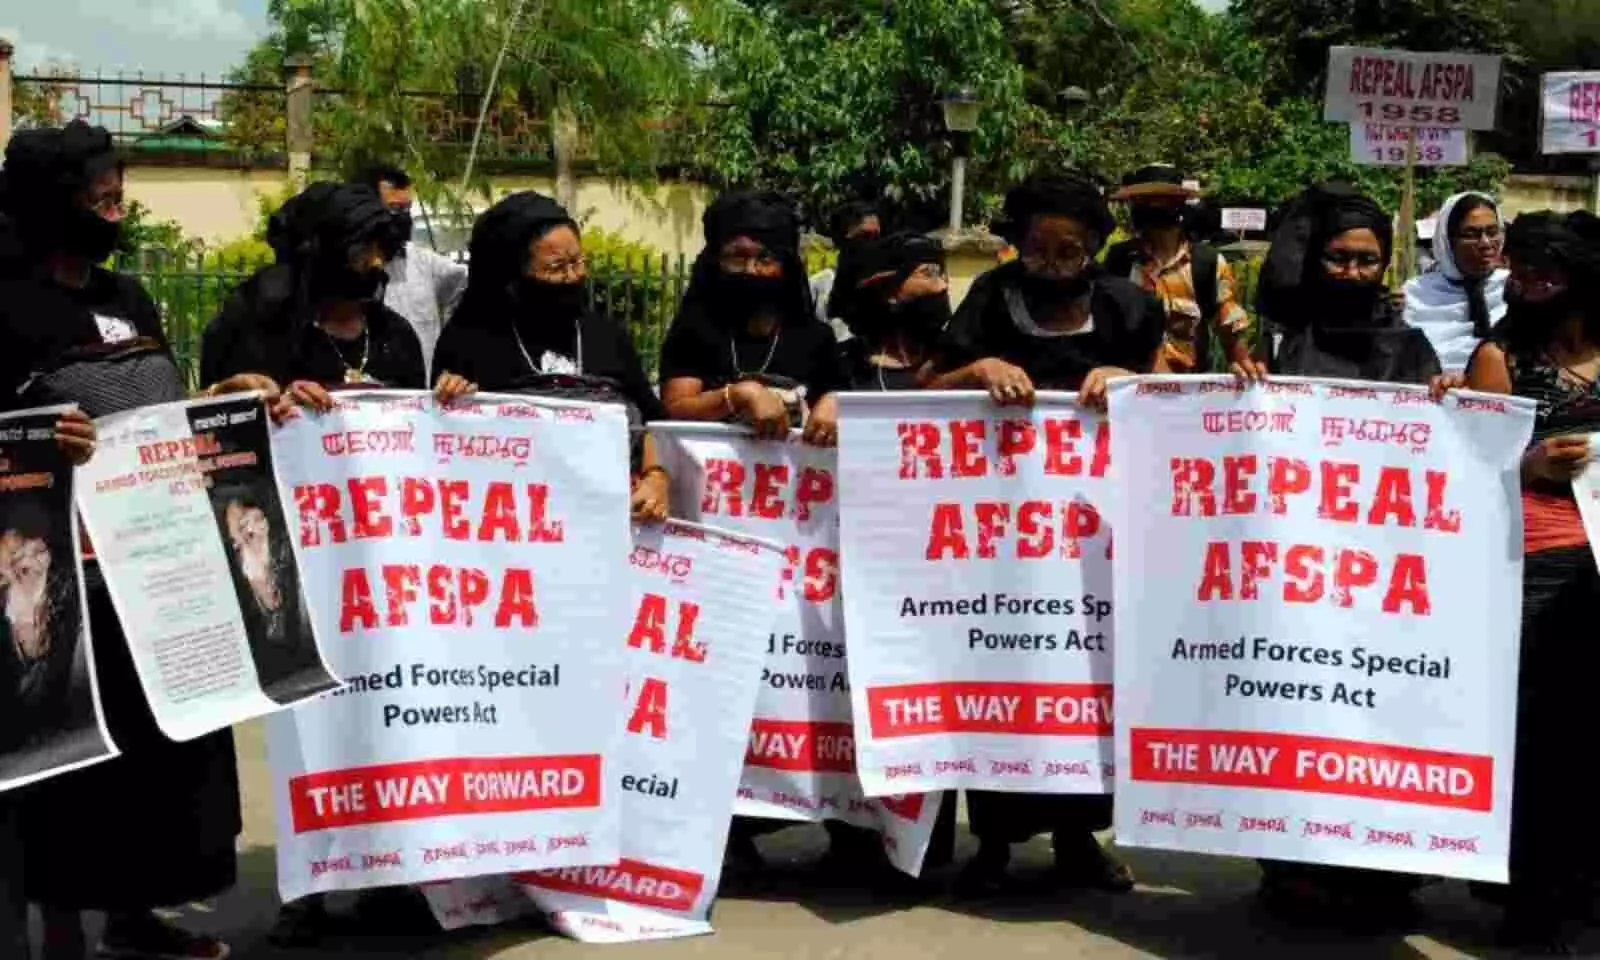 AFSPA: Good omens of rethinking